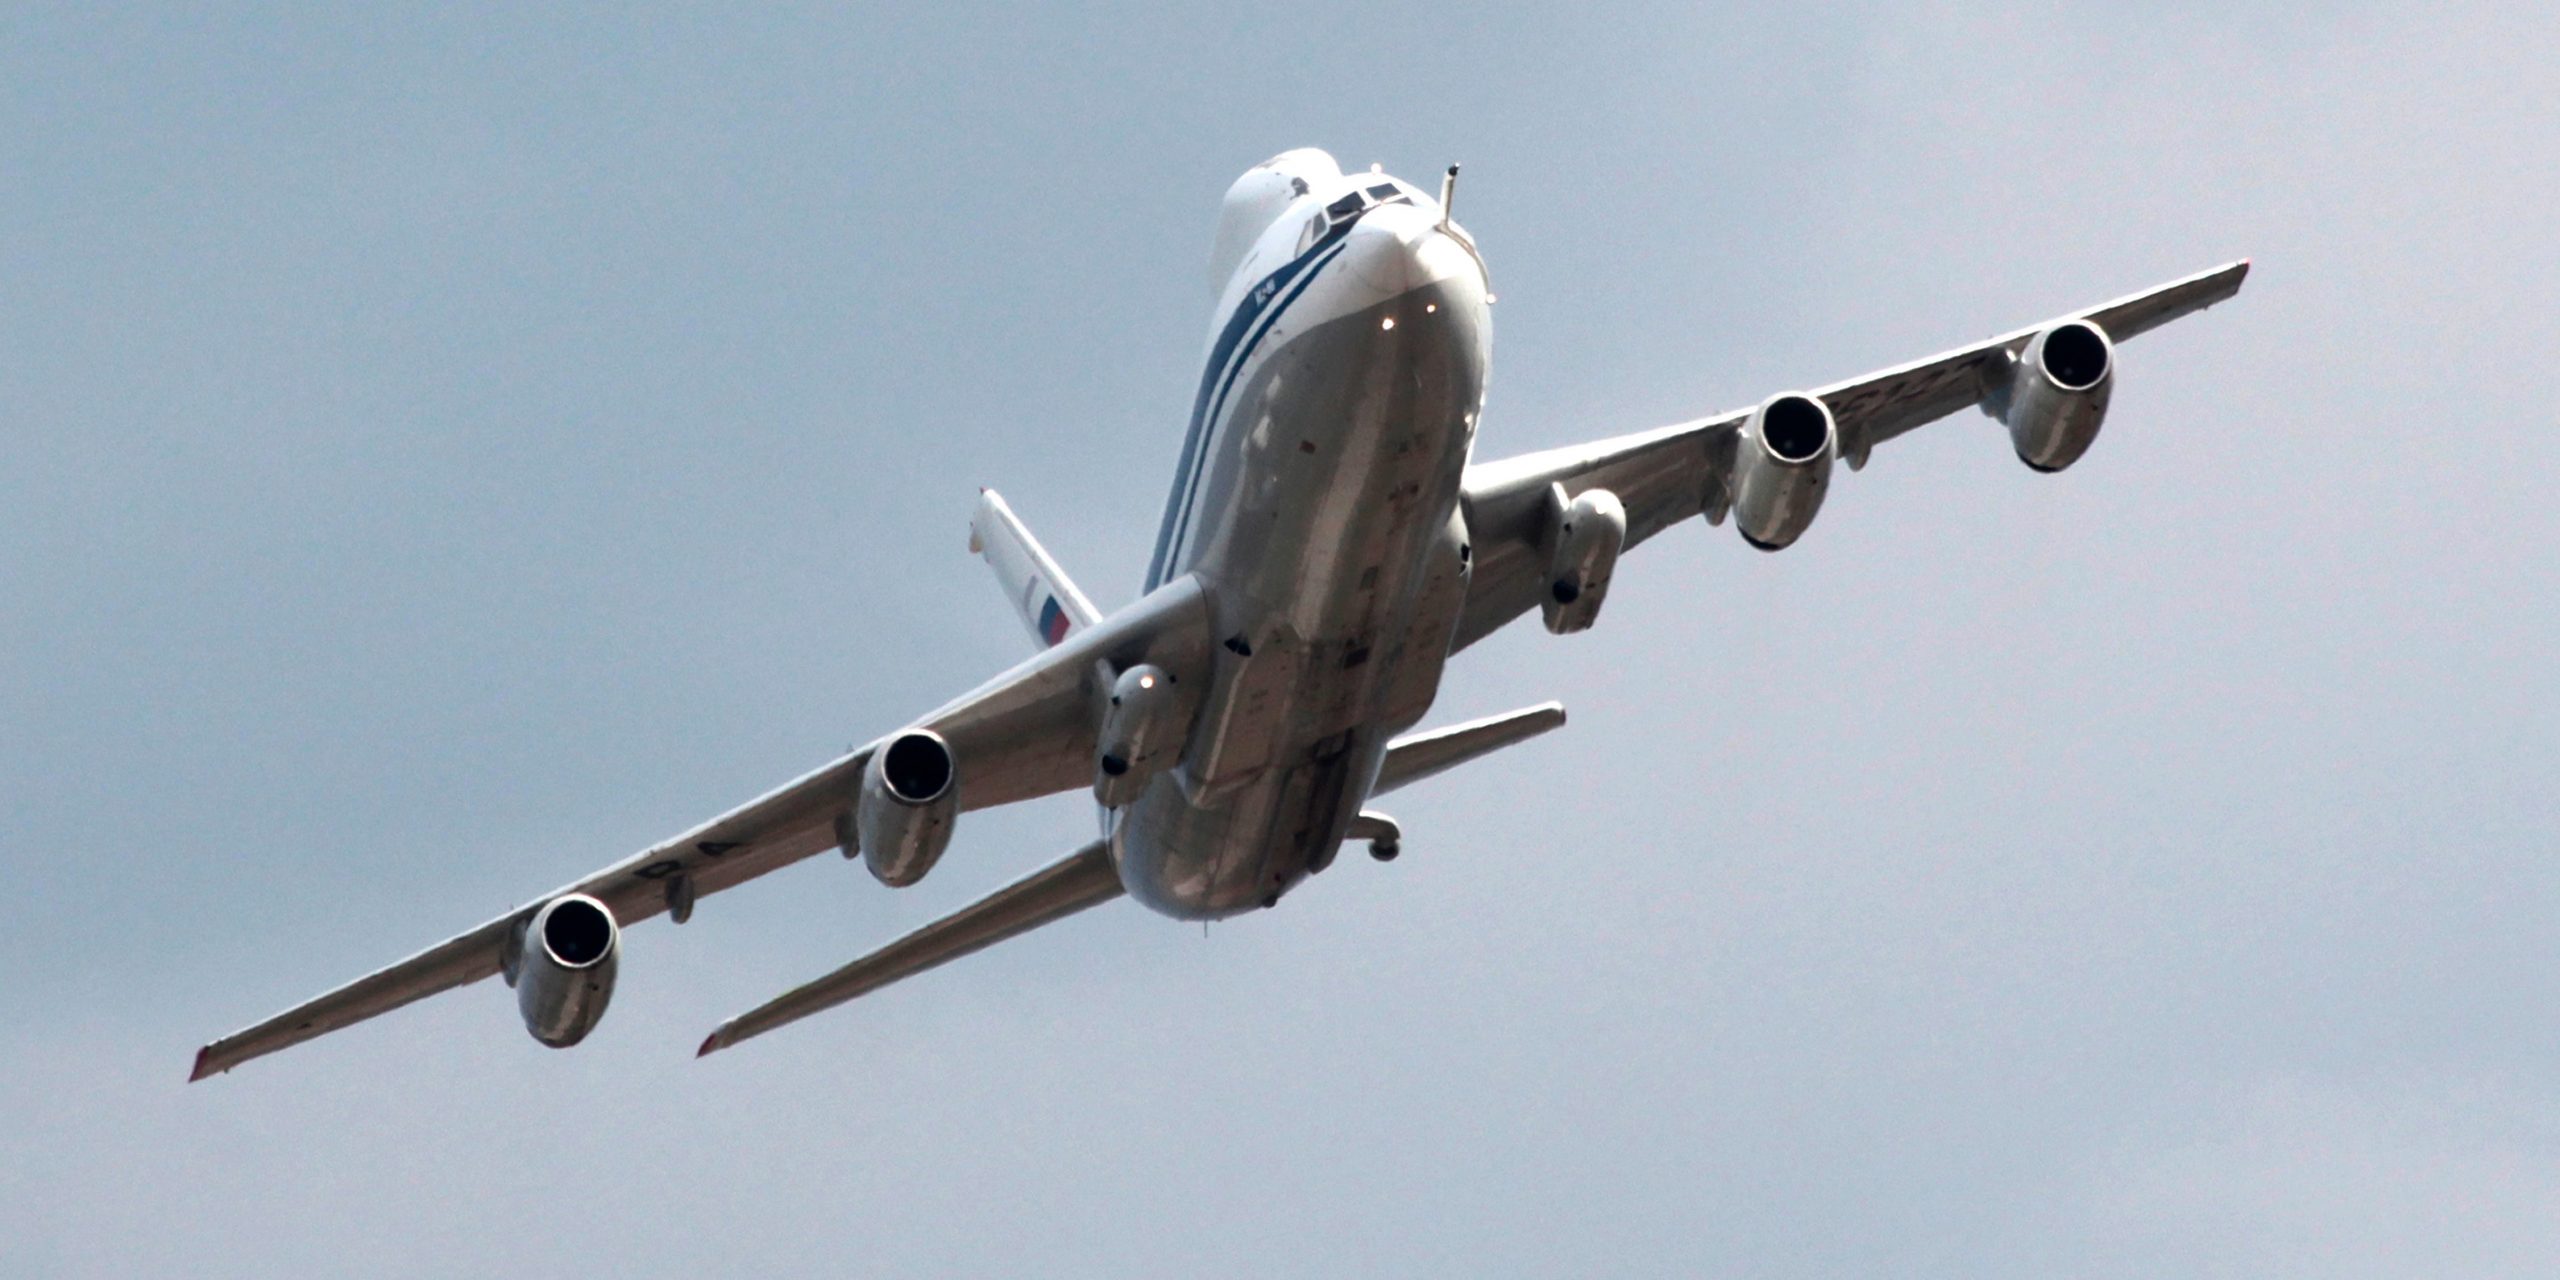 Russian IL-80 'Doomsday' plane in flight